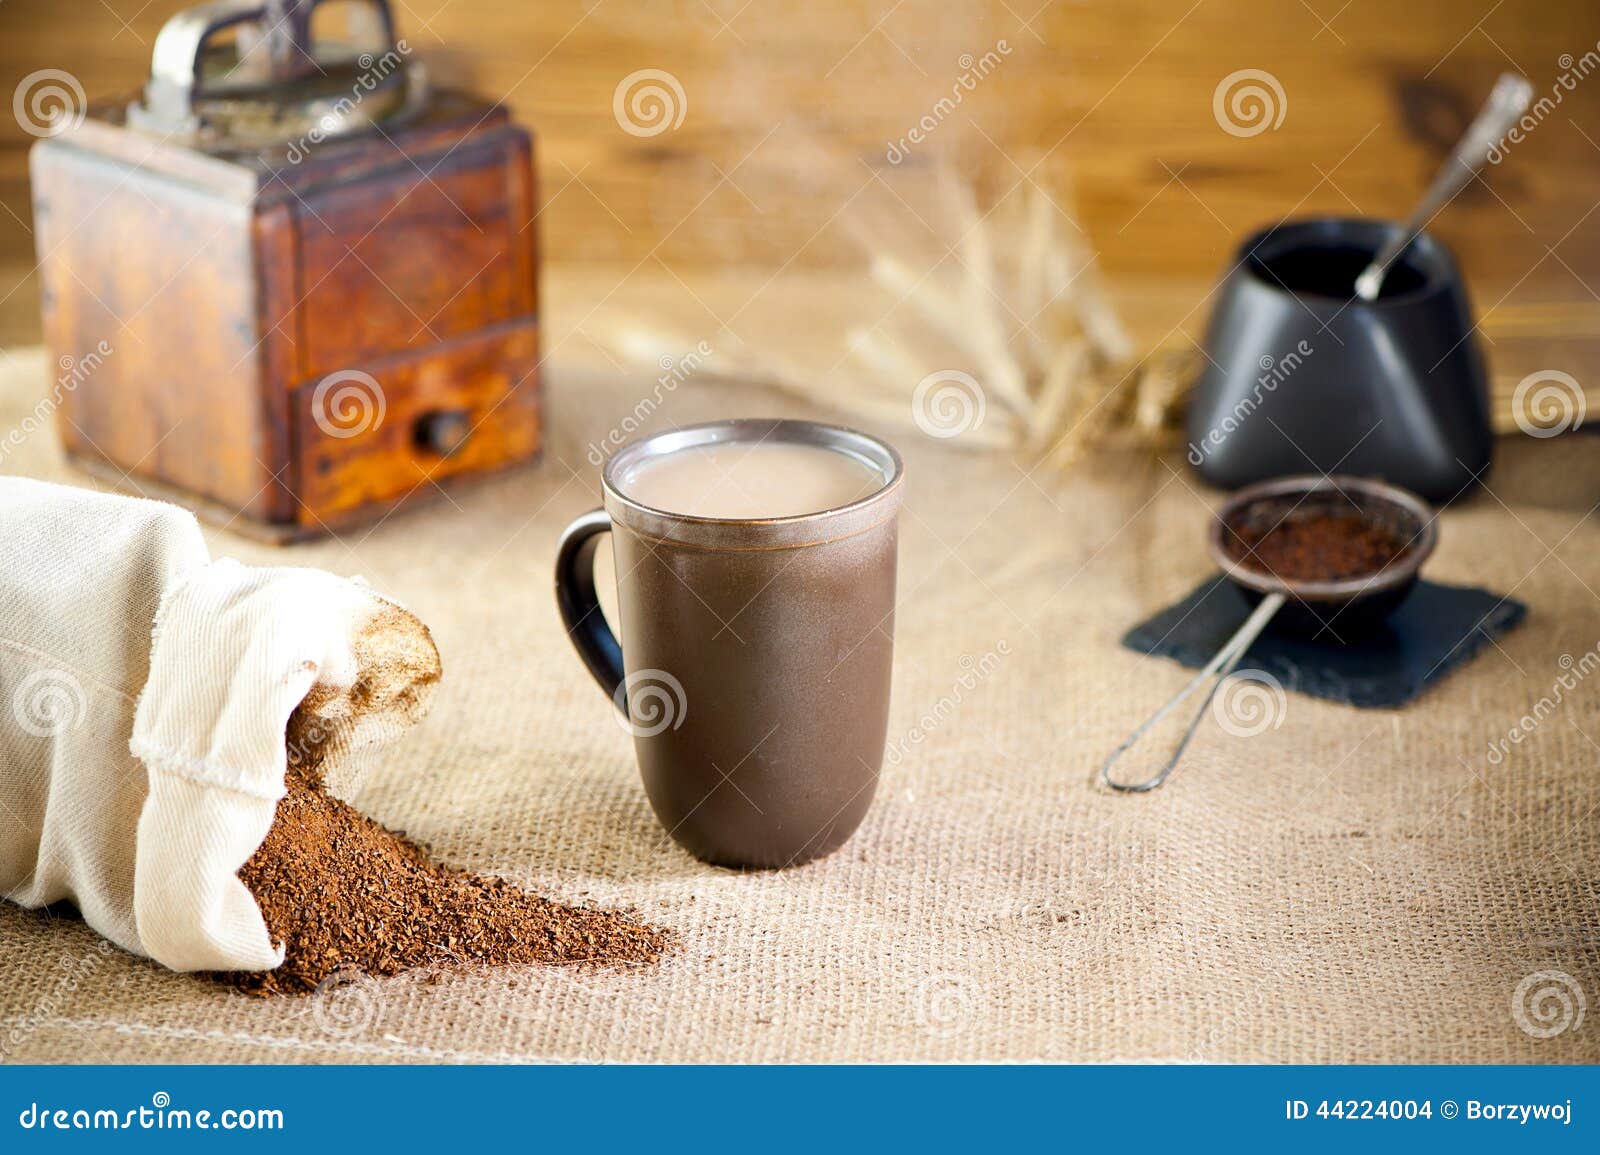 mug of substitute coffee